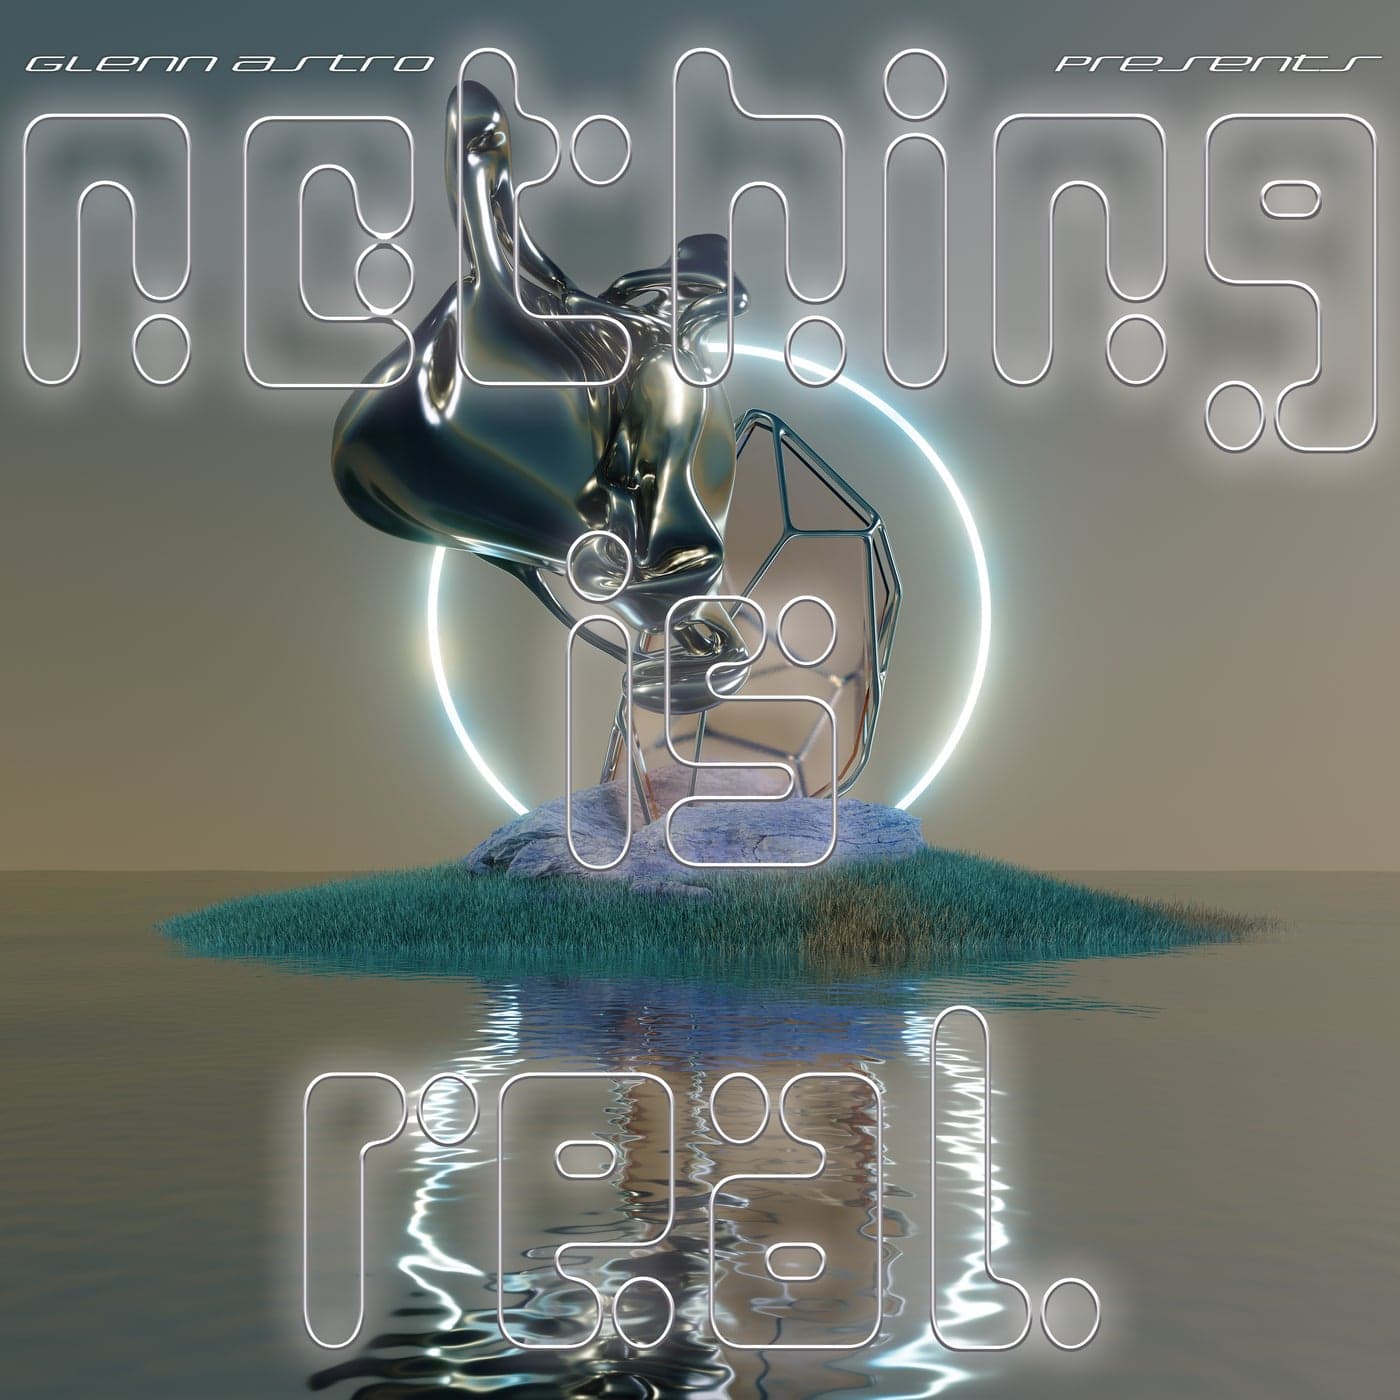 Download Glenn Astro, Mental Trance, Crystalline Reality, Eye Soul8r, Brain Liquor, DJ 1999, The Foundation - Nothing Is Real on Electrobuzz